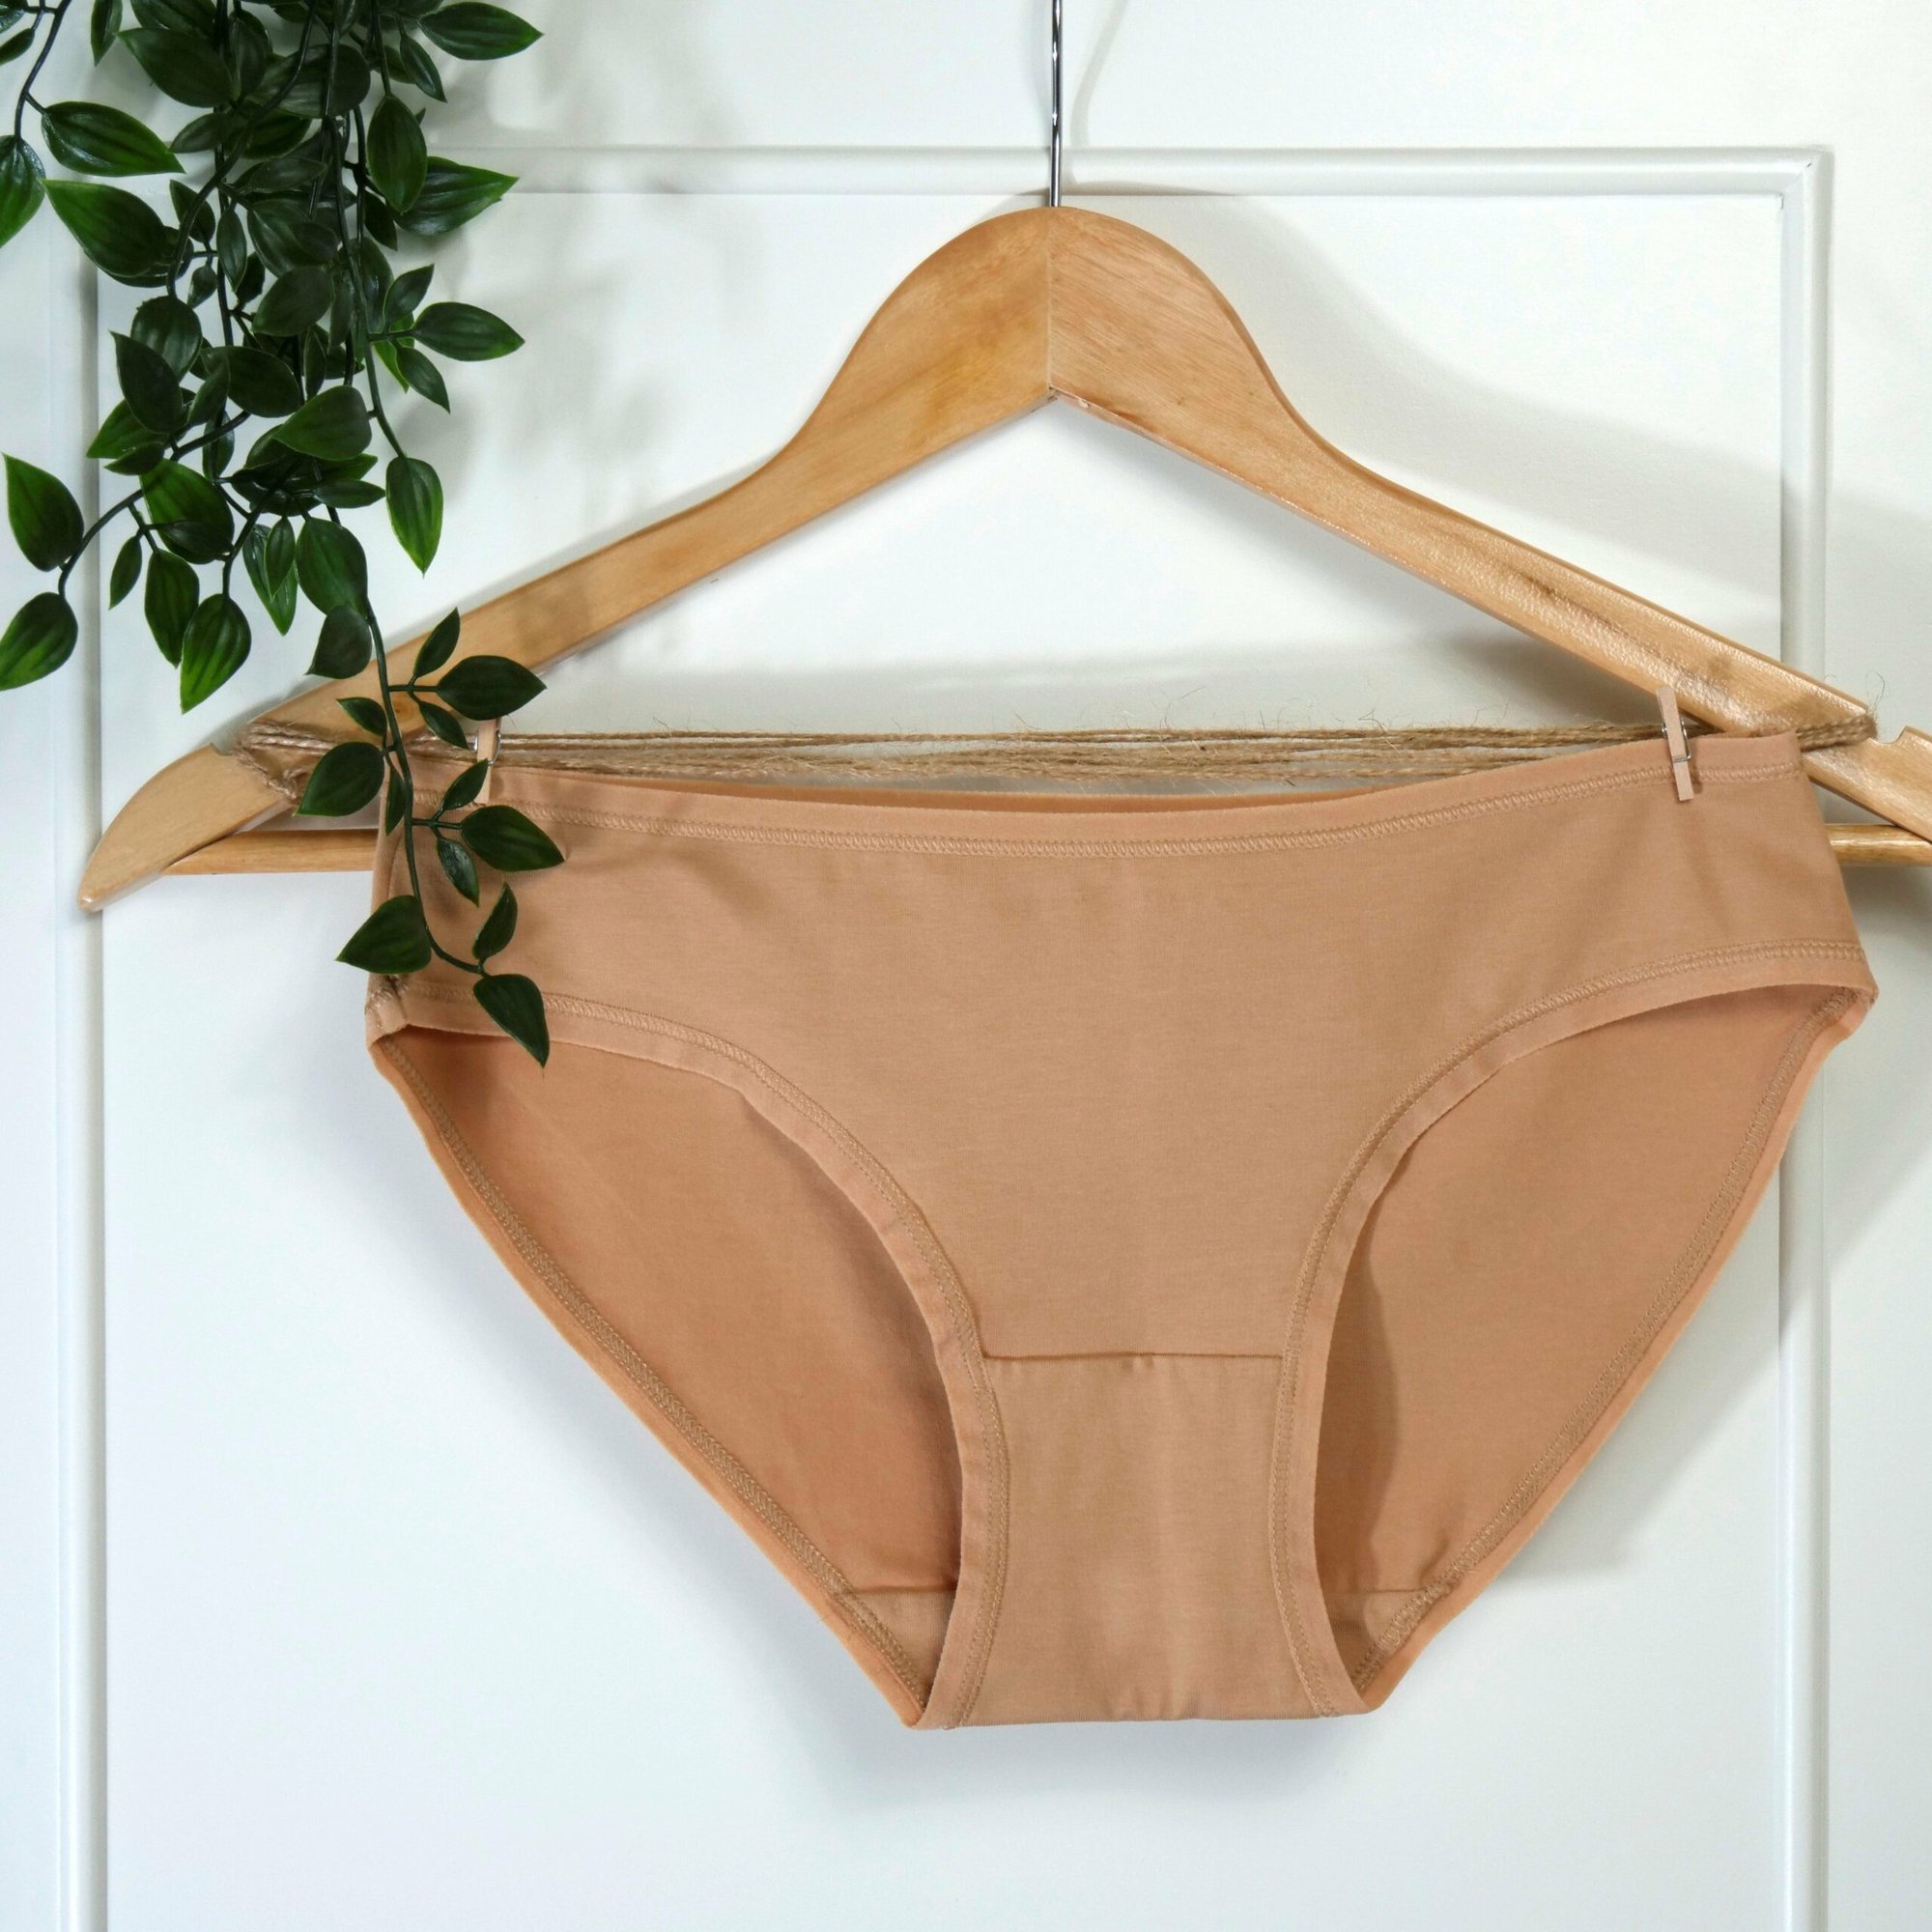 Low-rise underwear in organic cotton